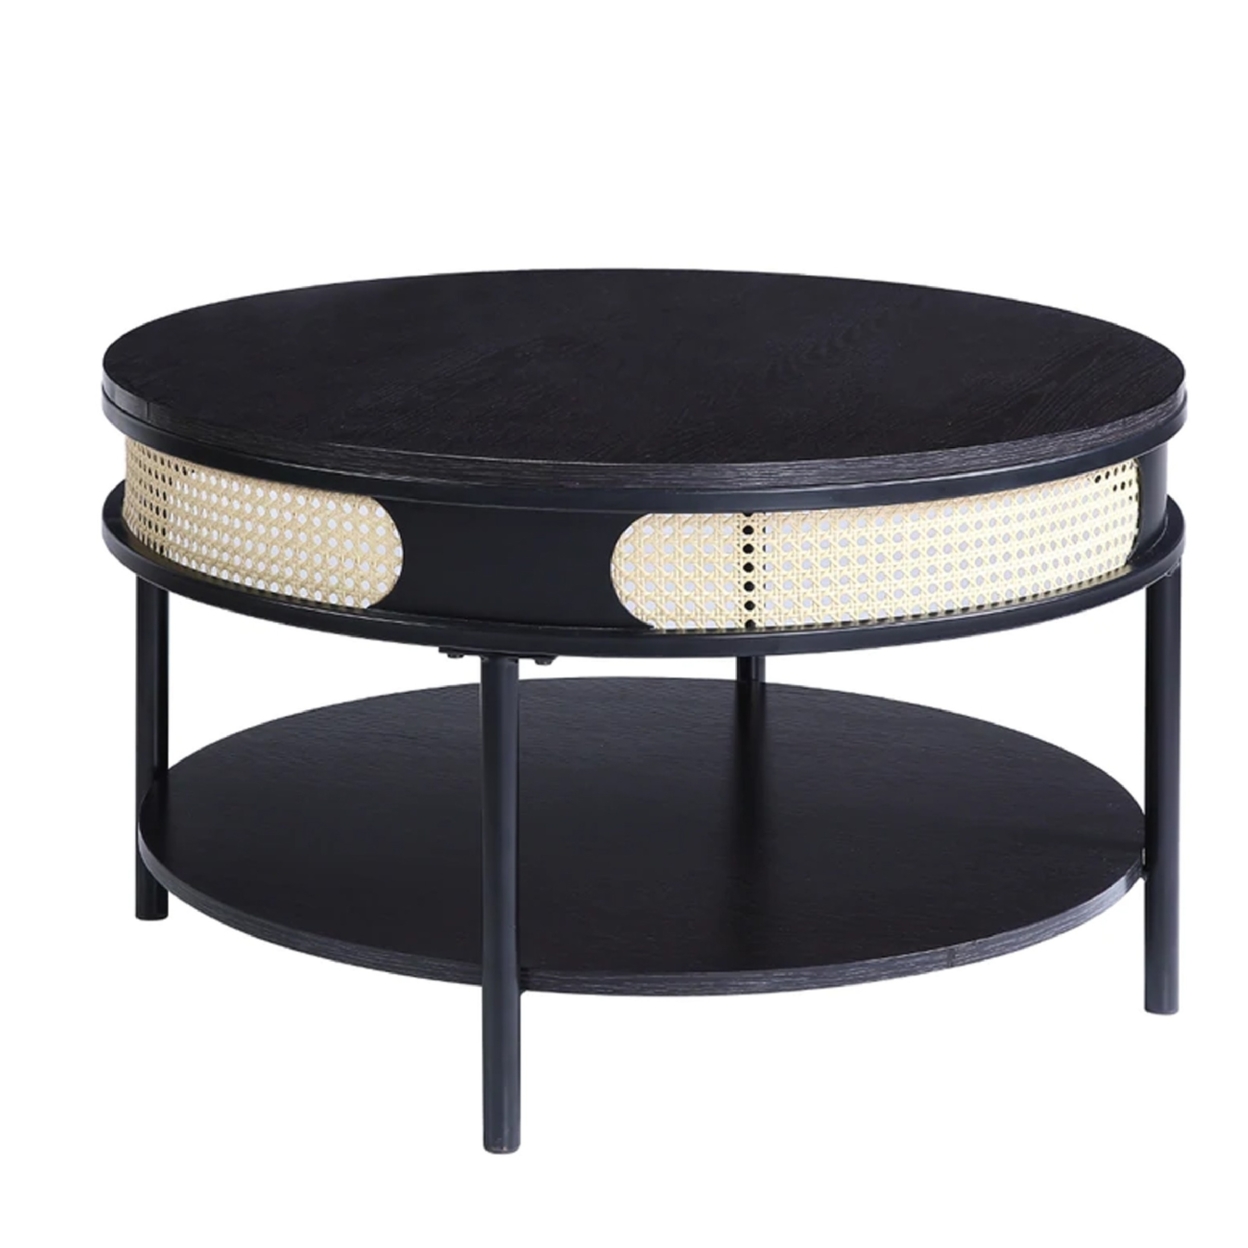 Bert 32 Inch Round Coffee Table, Rattan Apron Accent, Metal Legs, Black- Saltoro Sherpi